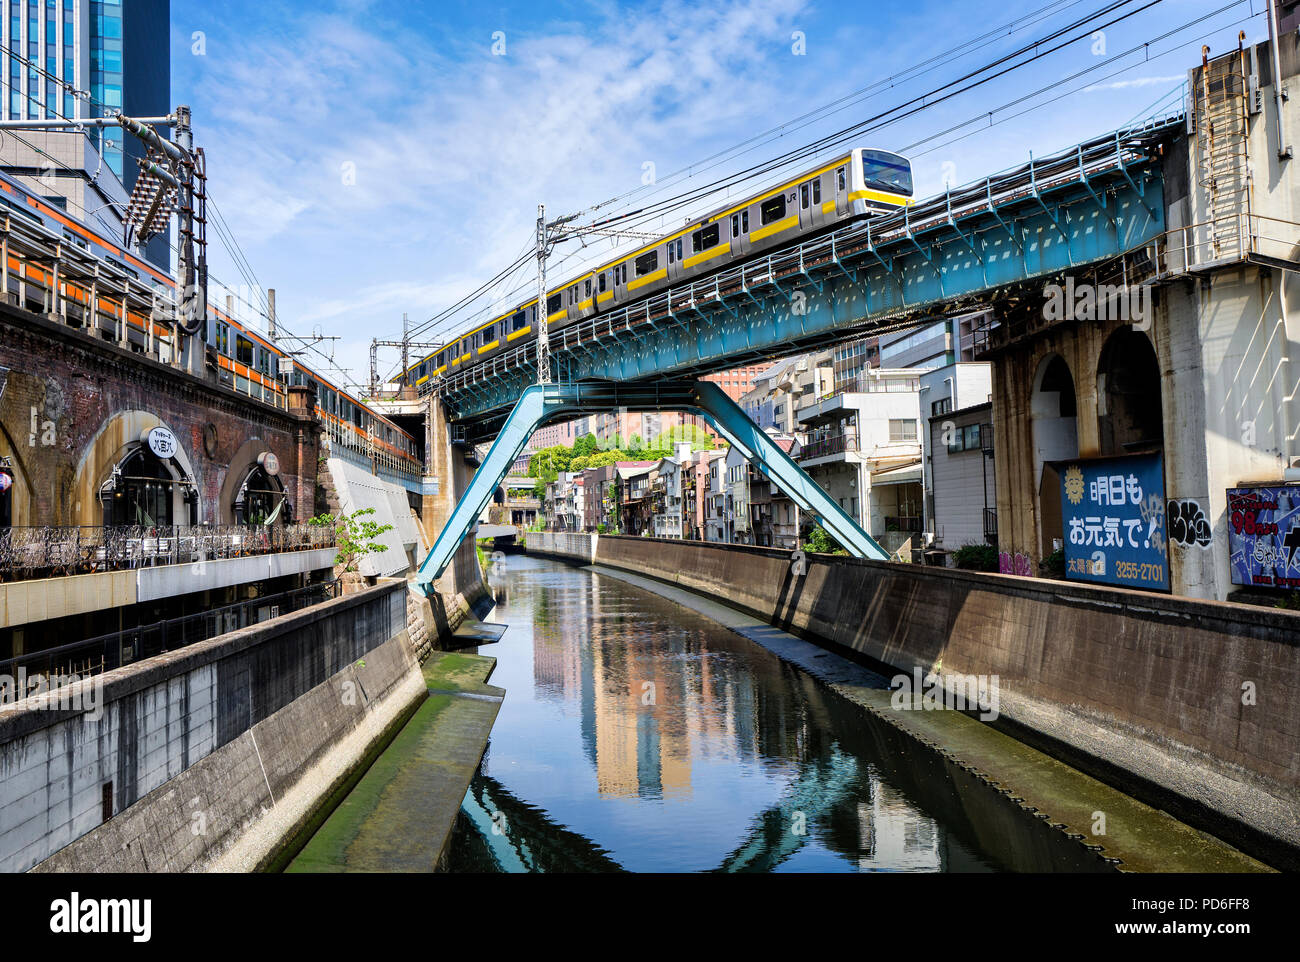 Japan, Honshu island, Kanto, Tokyo, railway lines crossing upon a river. Stock Photo